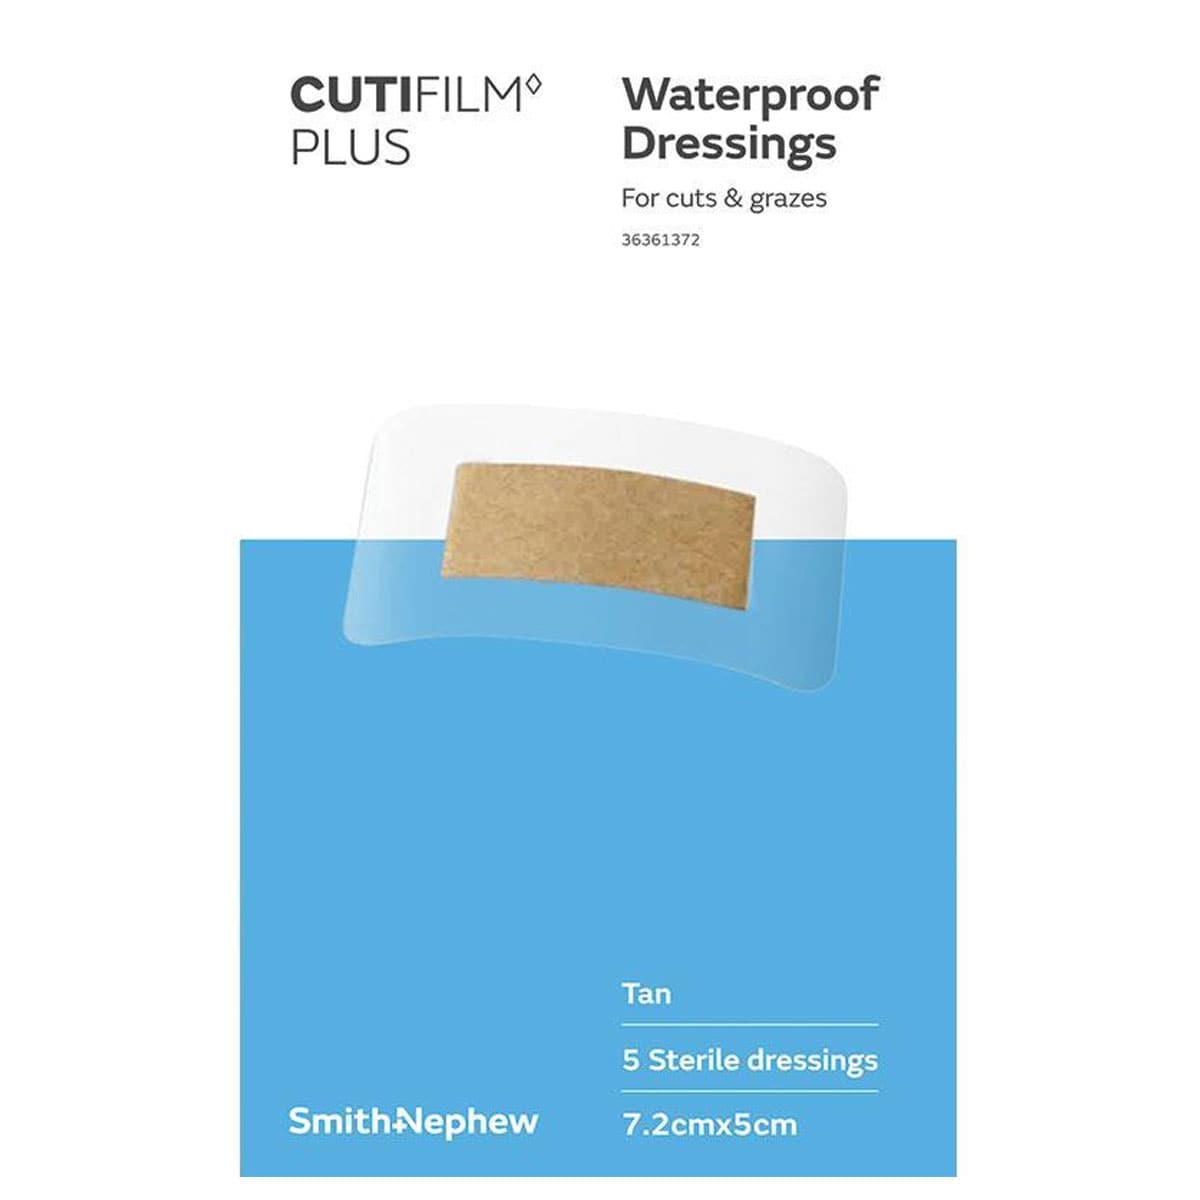 Cutifilm Plus Waterproof Dressing Tan 7.2cm x 5cm 5 Pack by Smith & Nephew